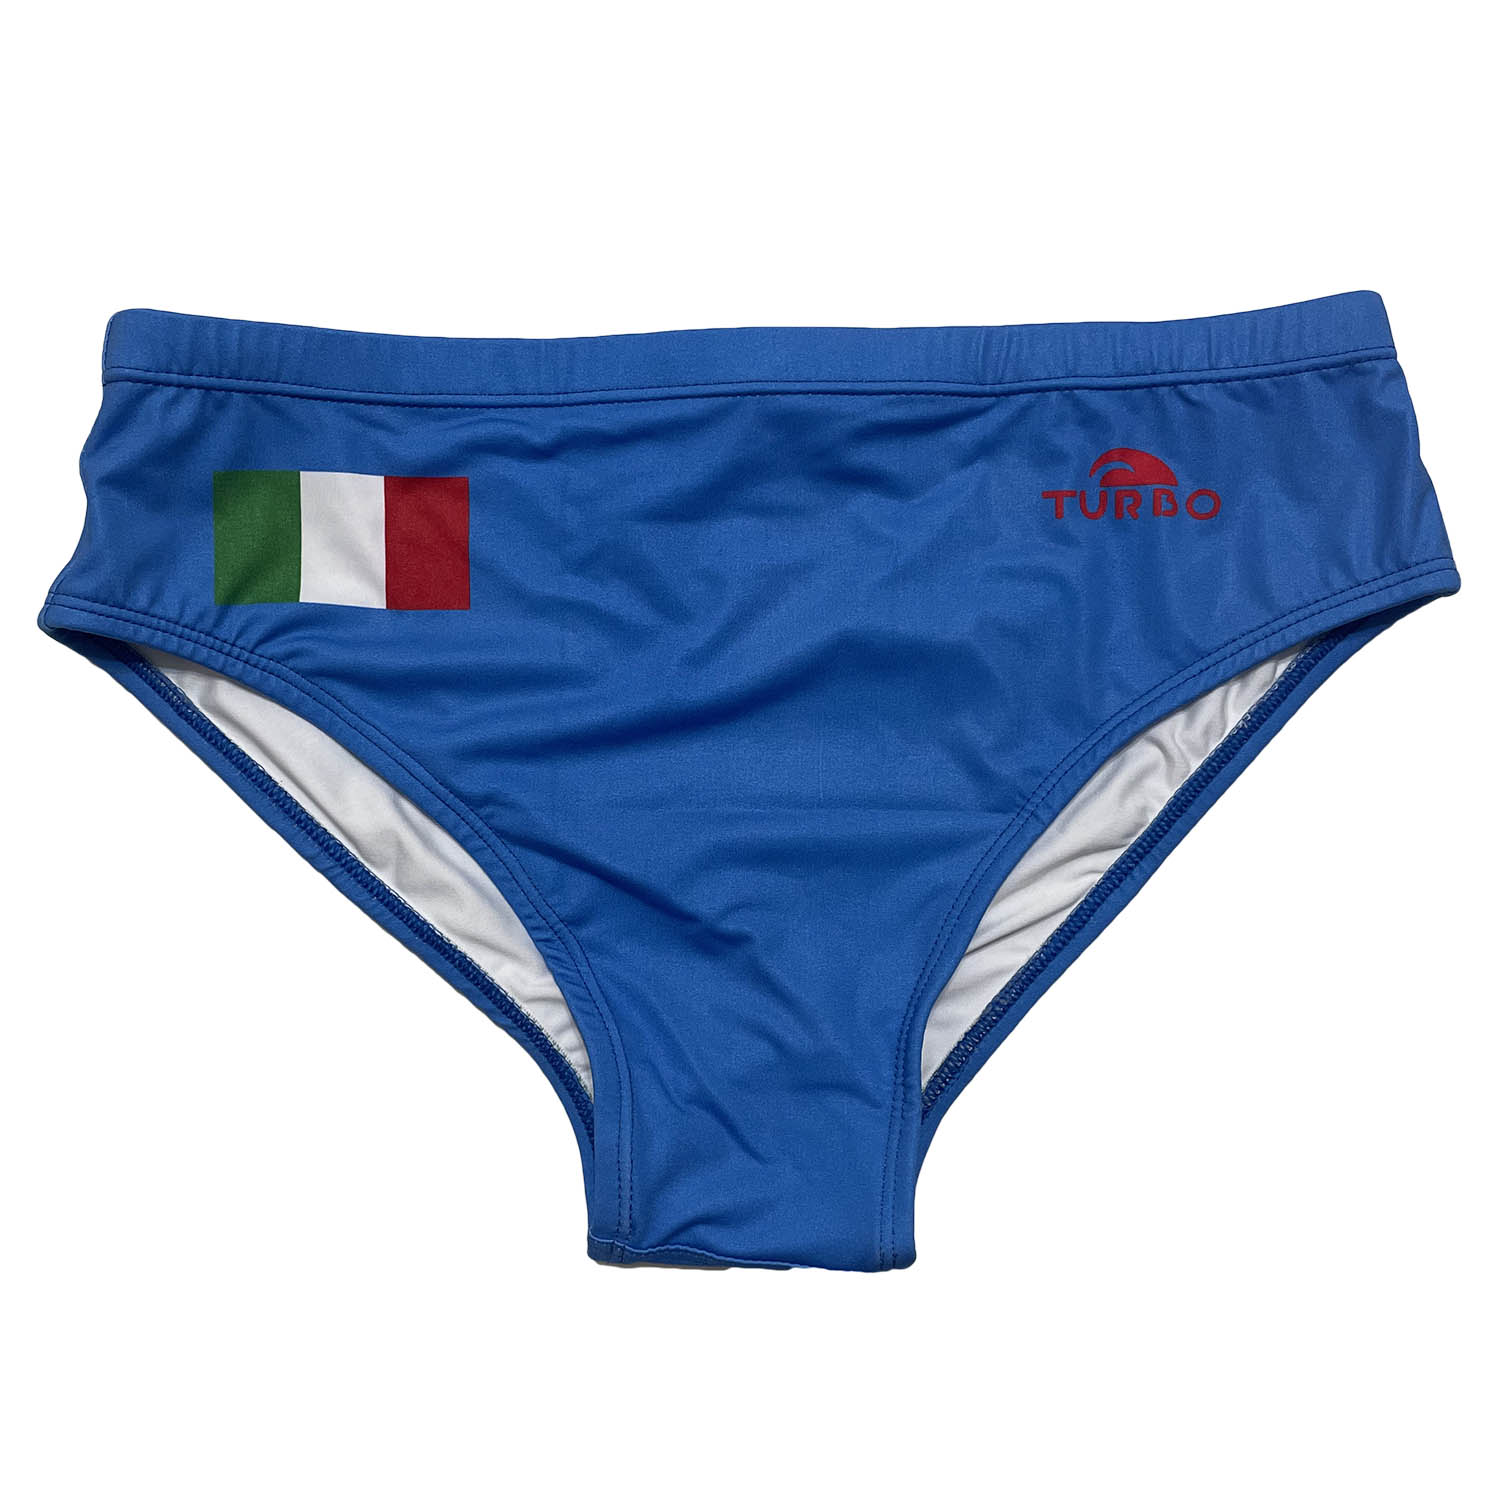 مایو مردانه مدل پرچم ایتالیا 2 کد 2214